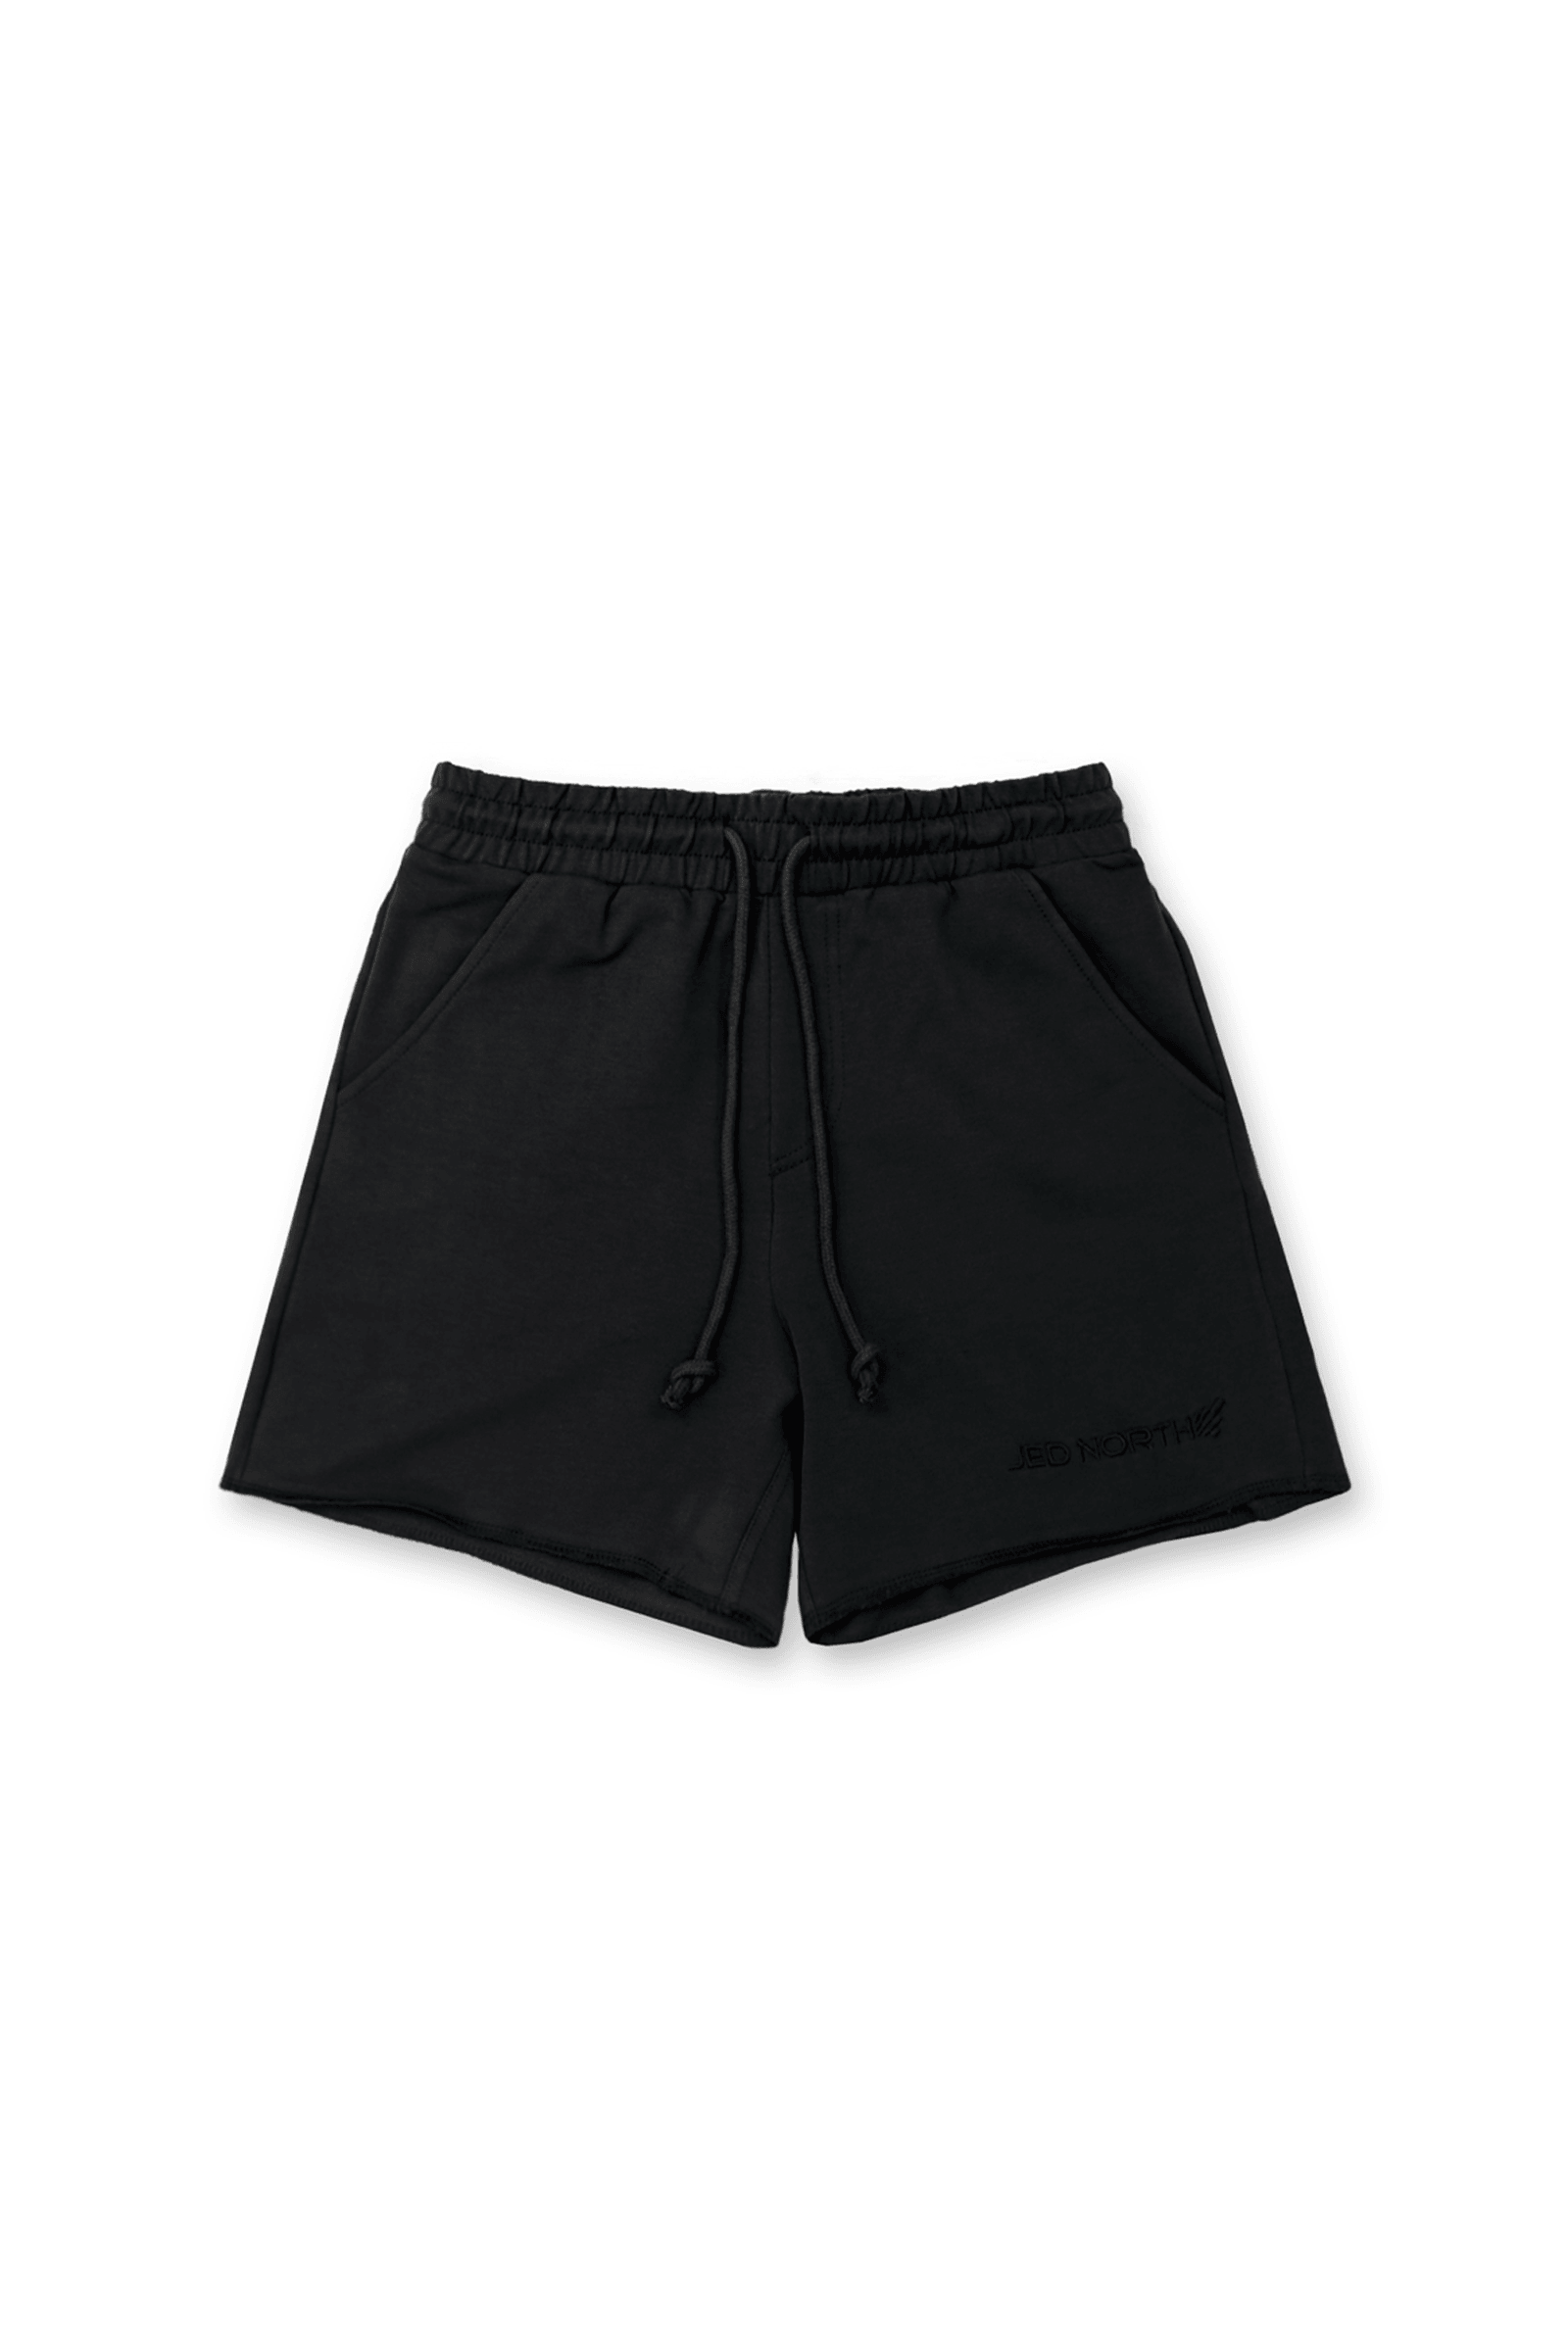 Motion 5'' Varsity Sweat Shorts - Black - Jed North Canada